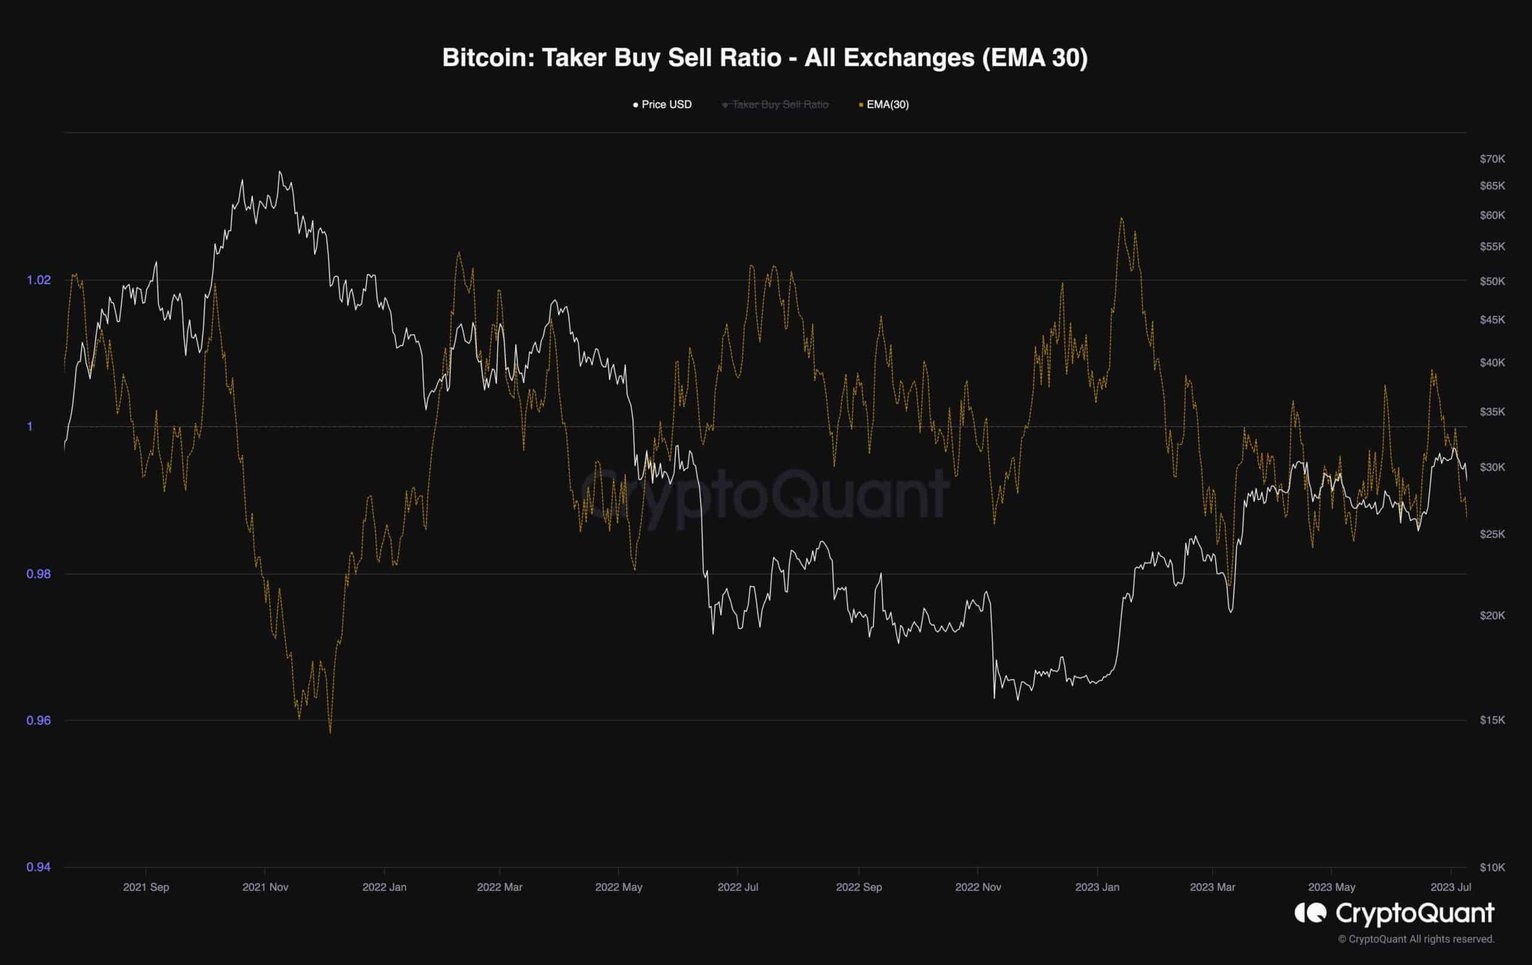 btc_taker_buy_sell_ratio_chart_1707231